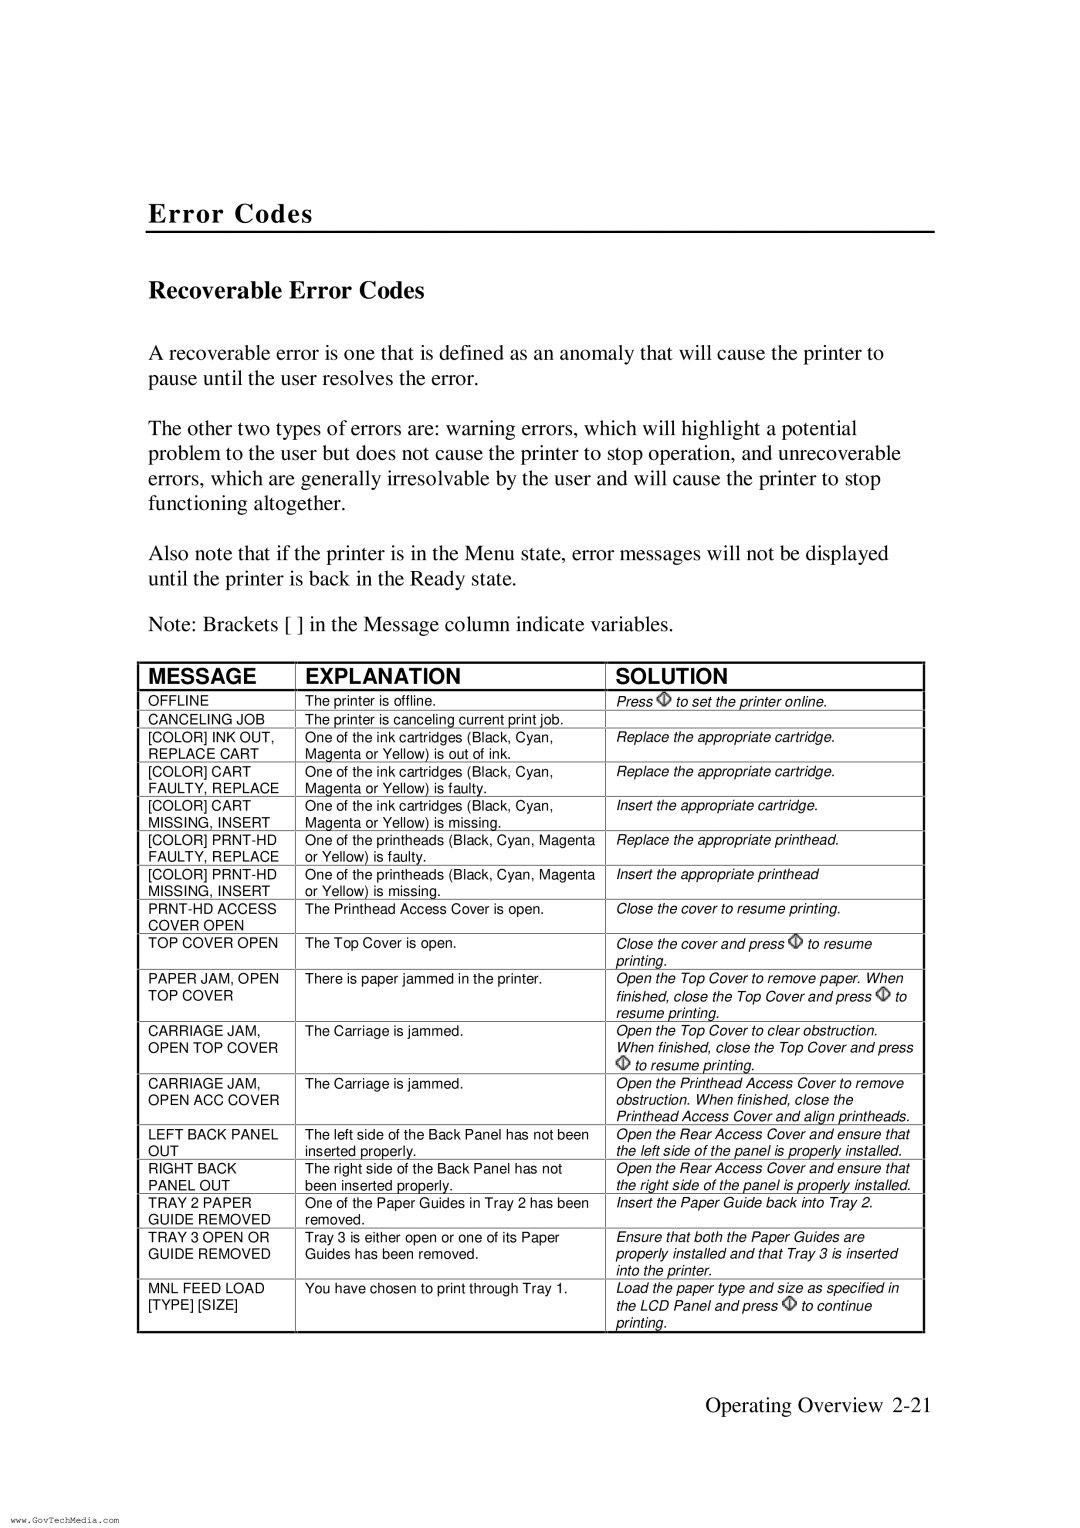 HP ColorPro CAD manual Recoverable Error Codes 